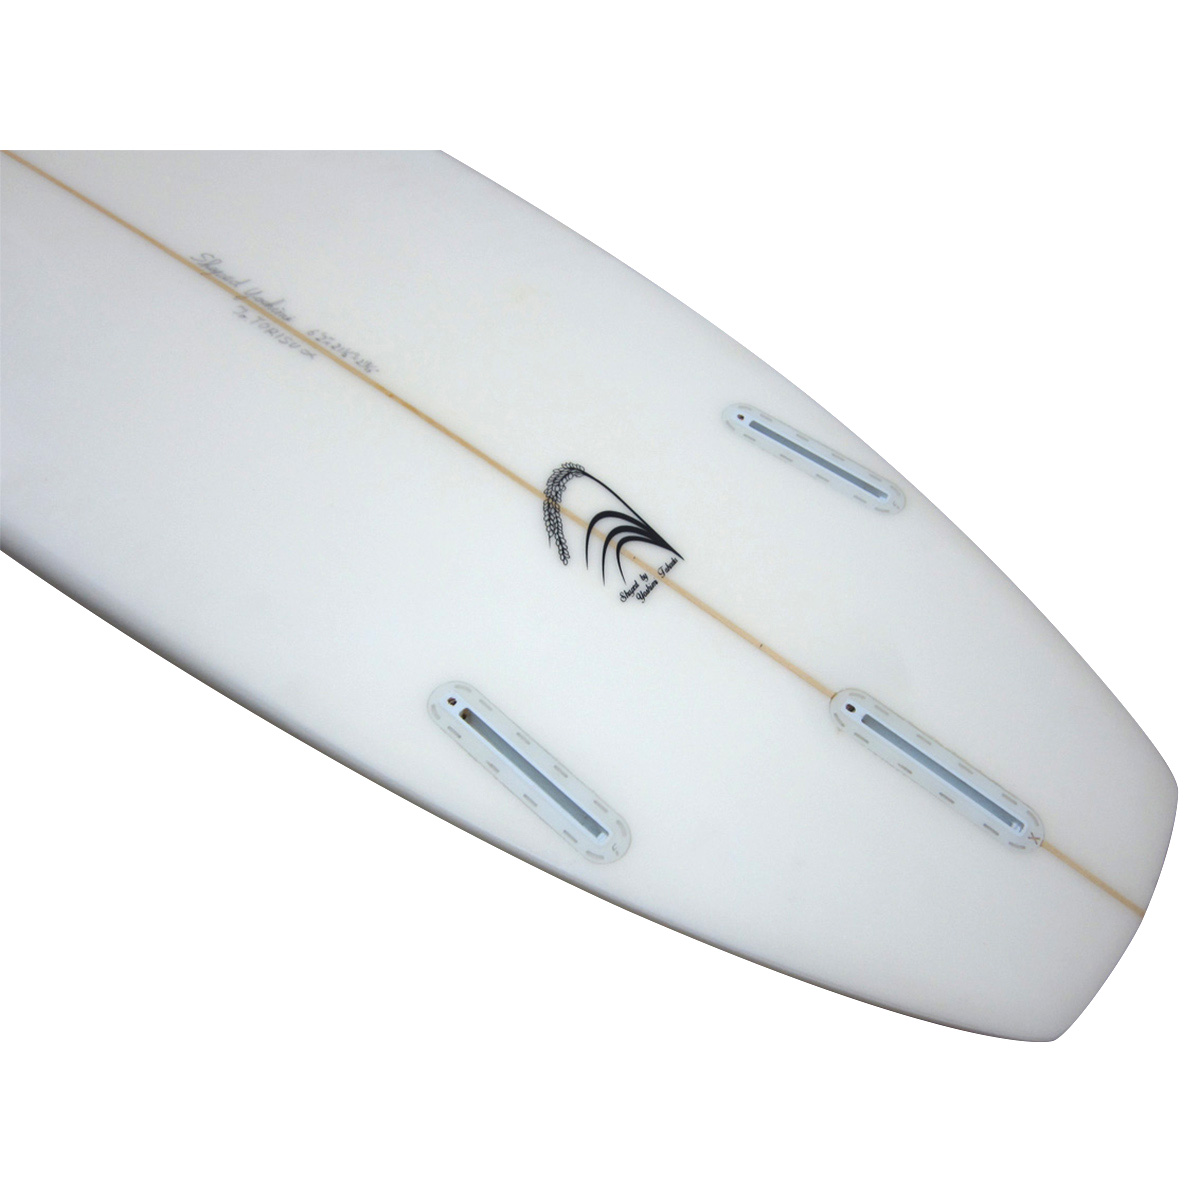 Yoshimi Takada Surfboards / 6`2 Custom Egg Shaped By Yoshimi Takada